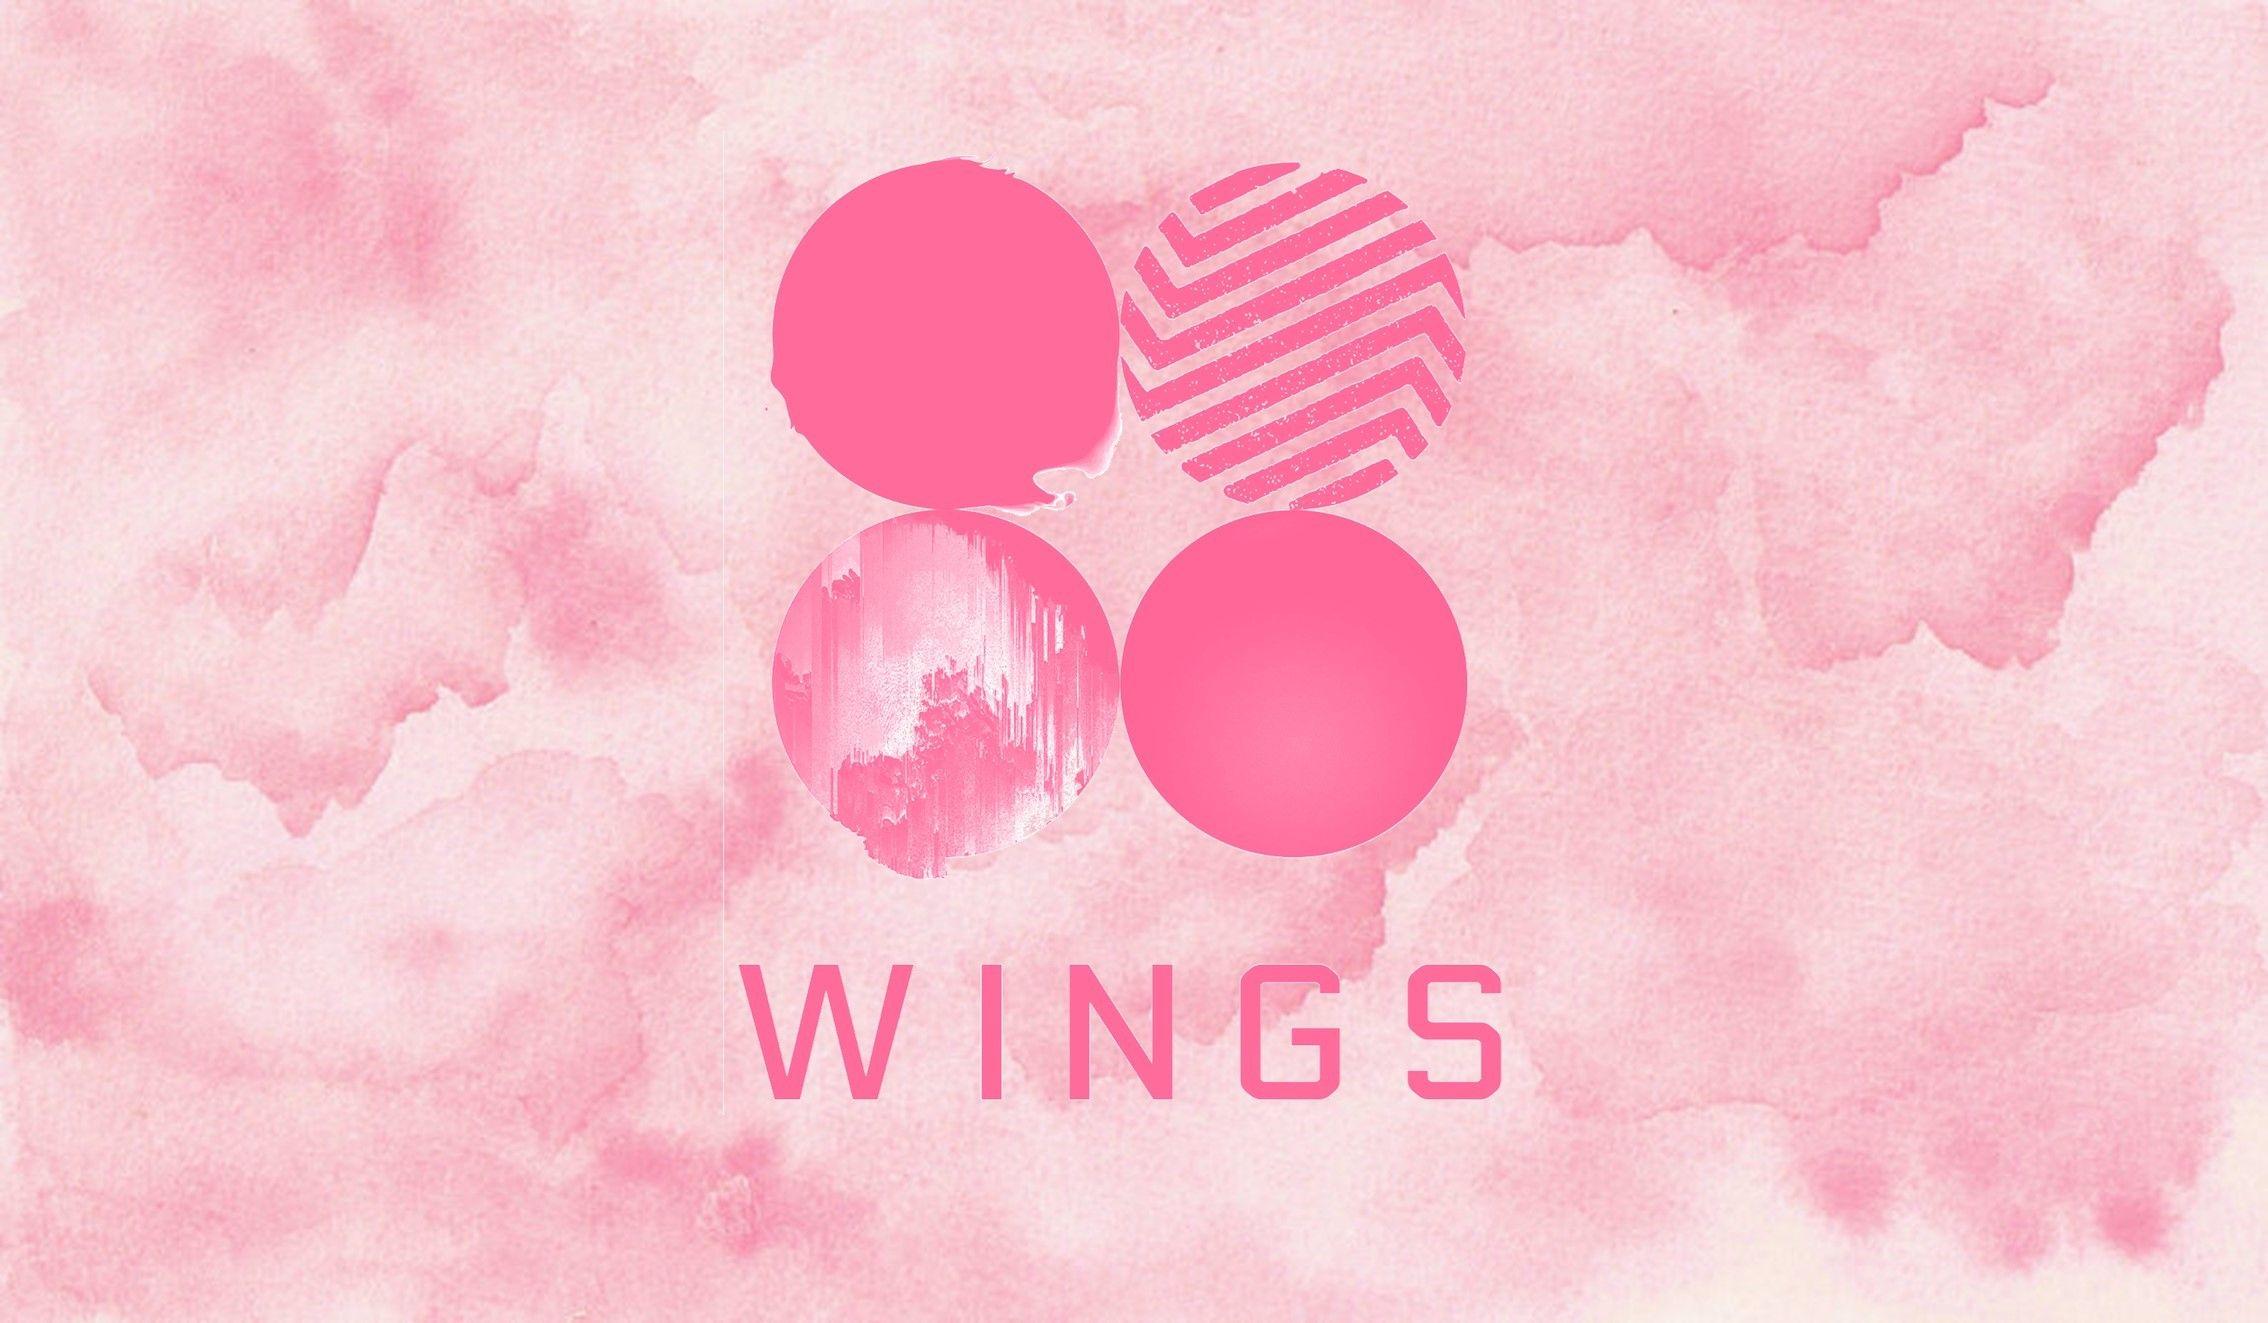 Bts Wings Wallpaperbest Bts Wings Wallpaper 2268x1323 Windows PIC